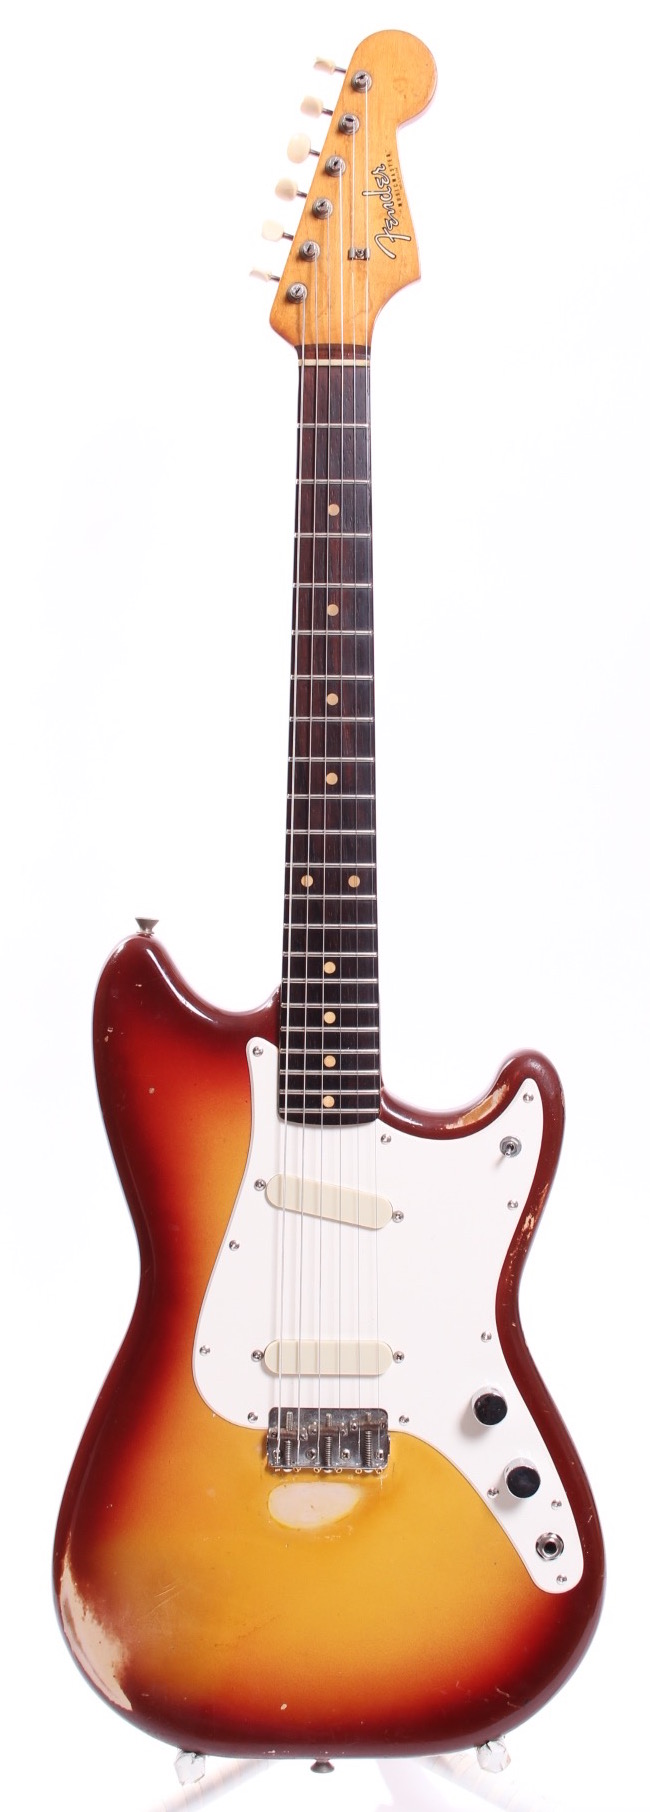 1966 fender musicmaster electric guitar